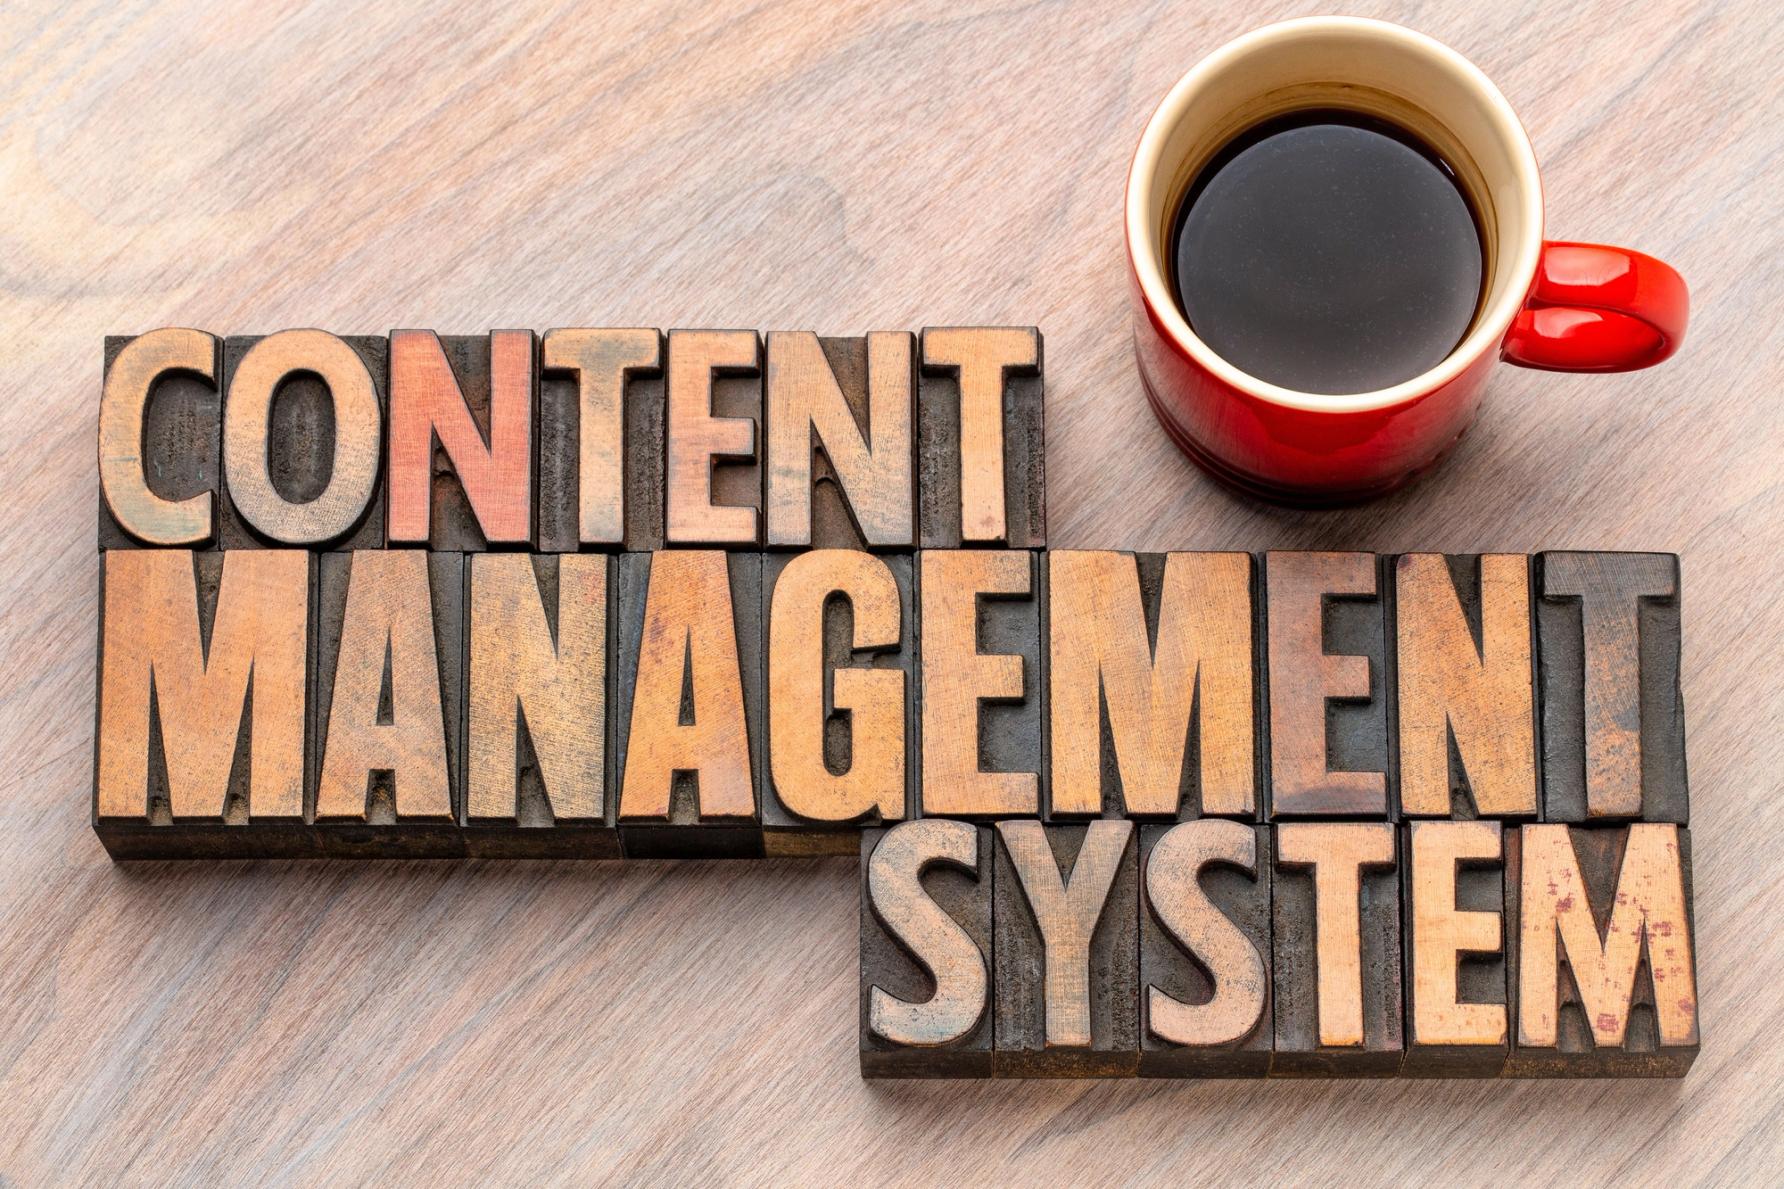 Content management systems help organize website content.